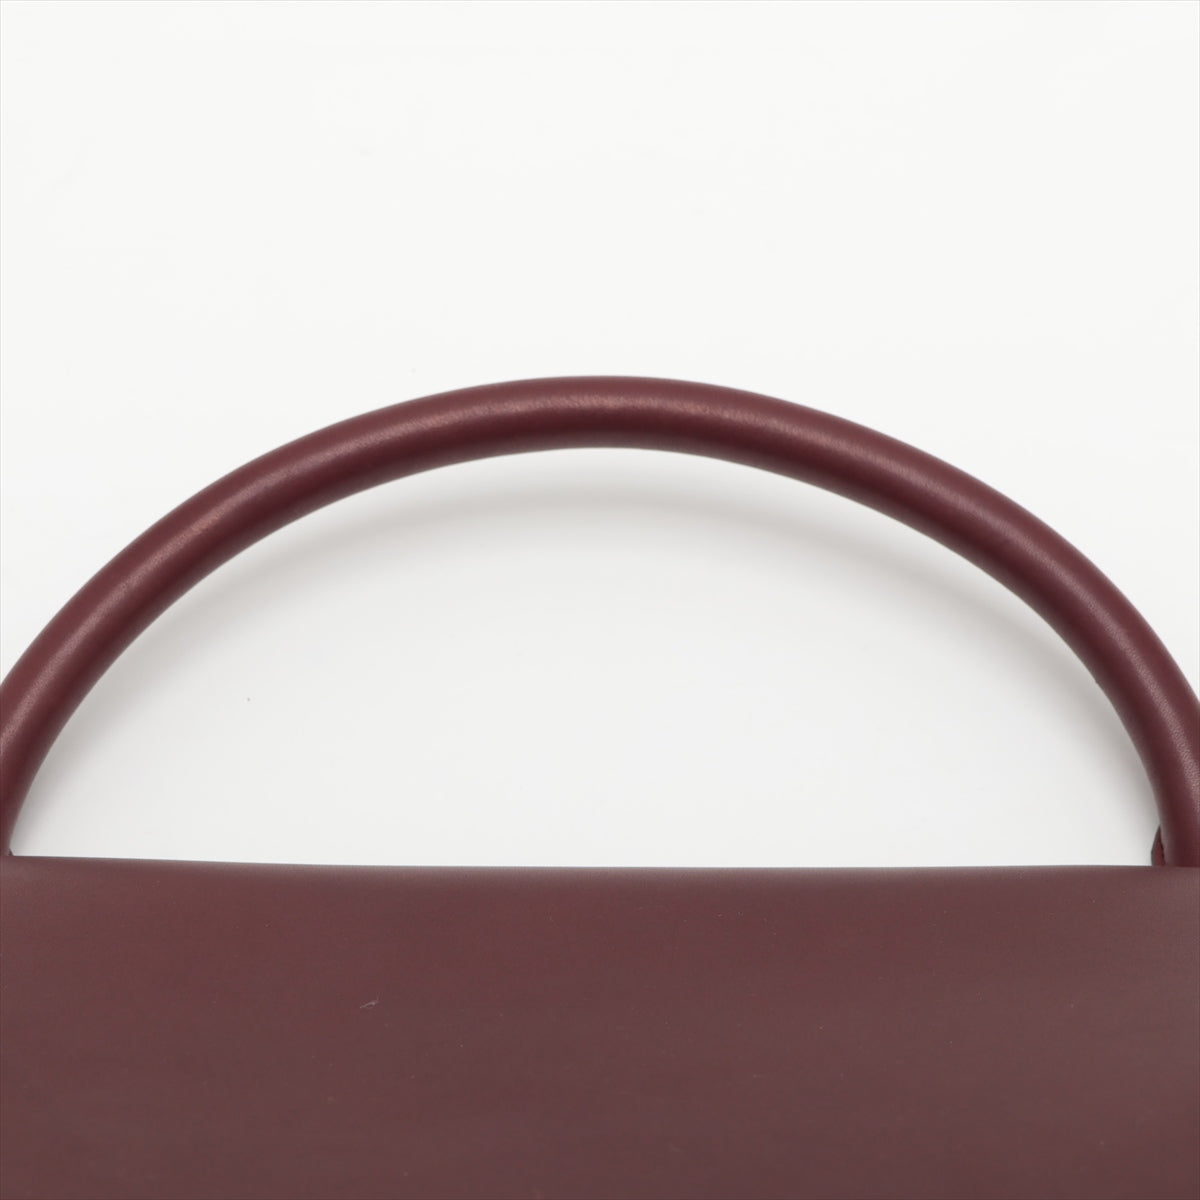 Celine Trapeze Top Handle Bag in Leather Suede Bordeaux